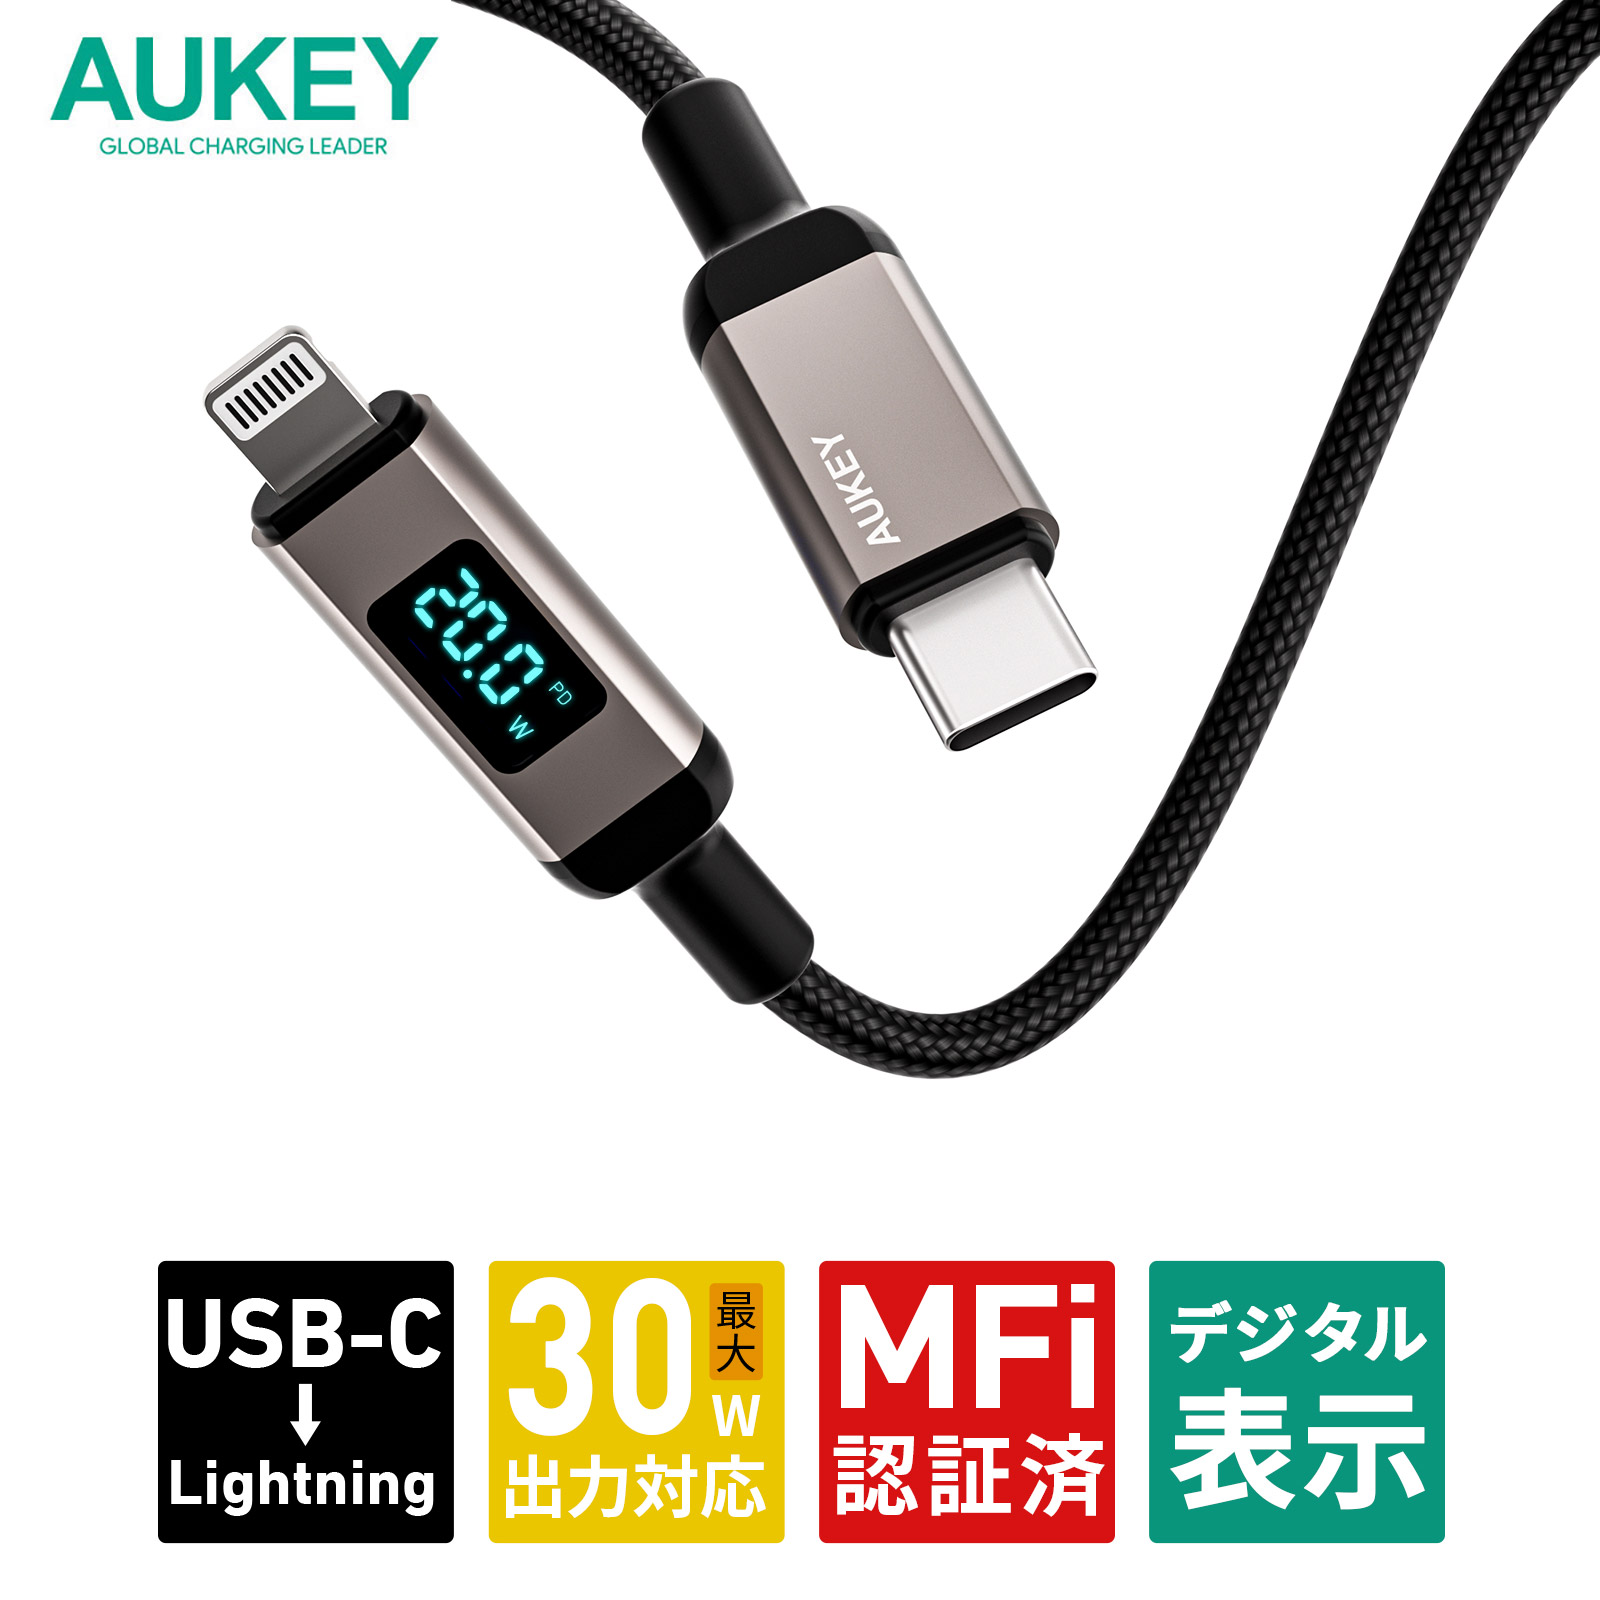 USB-C to Lightningケーブル CB-CL14